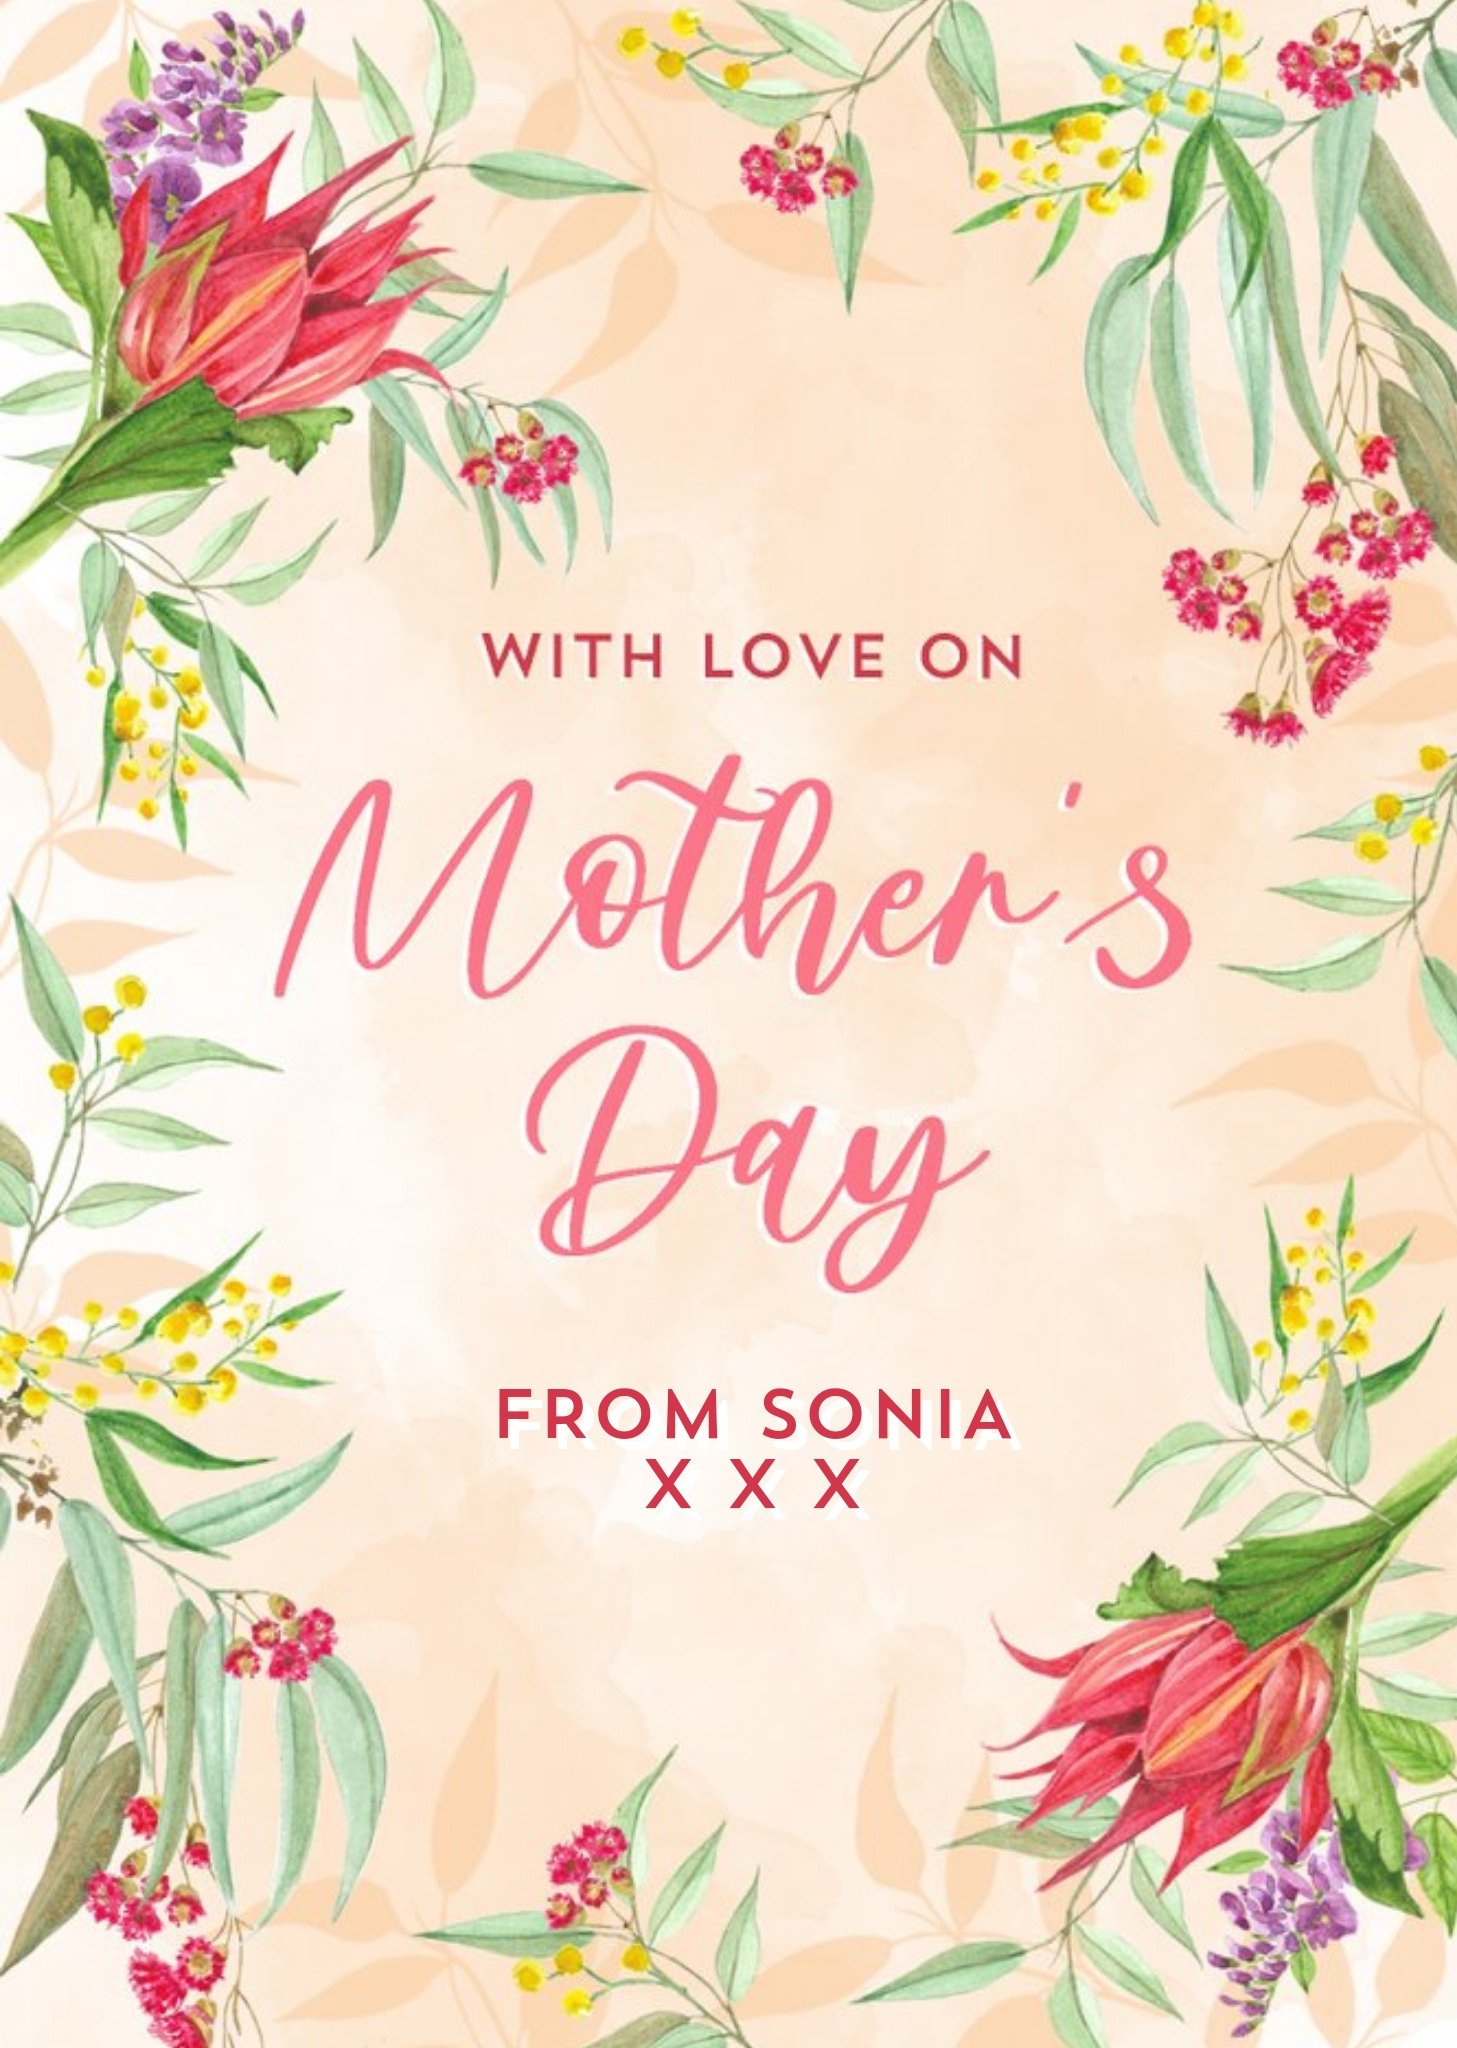 Moonpig Ivy Cottage Studio Sundae Mum Illustration Floral Mother's Day Card Ecard